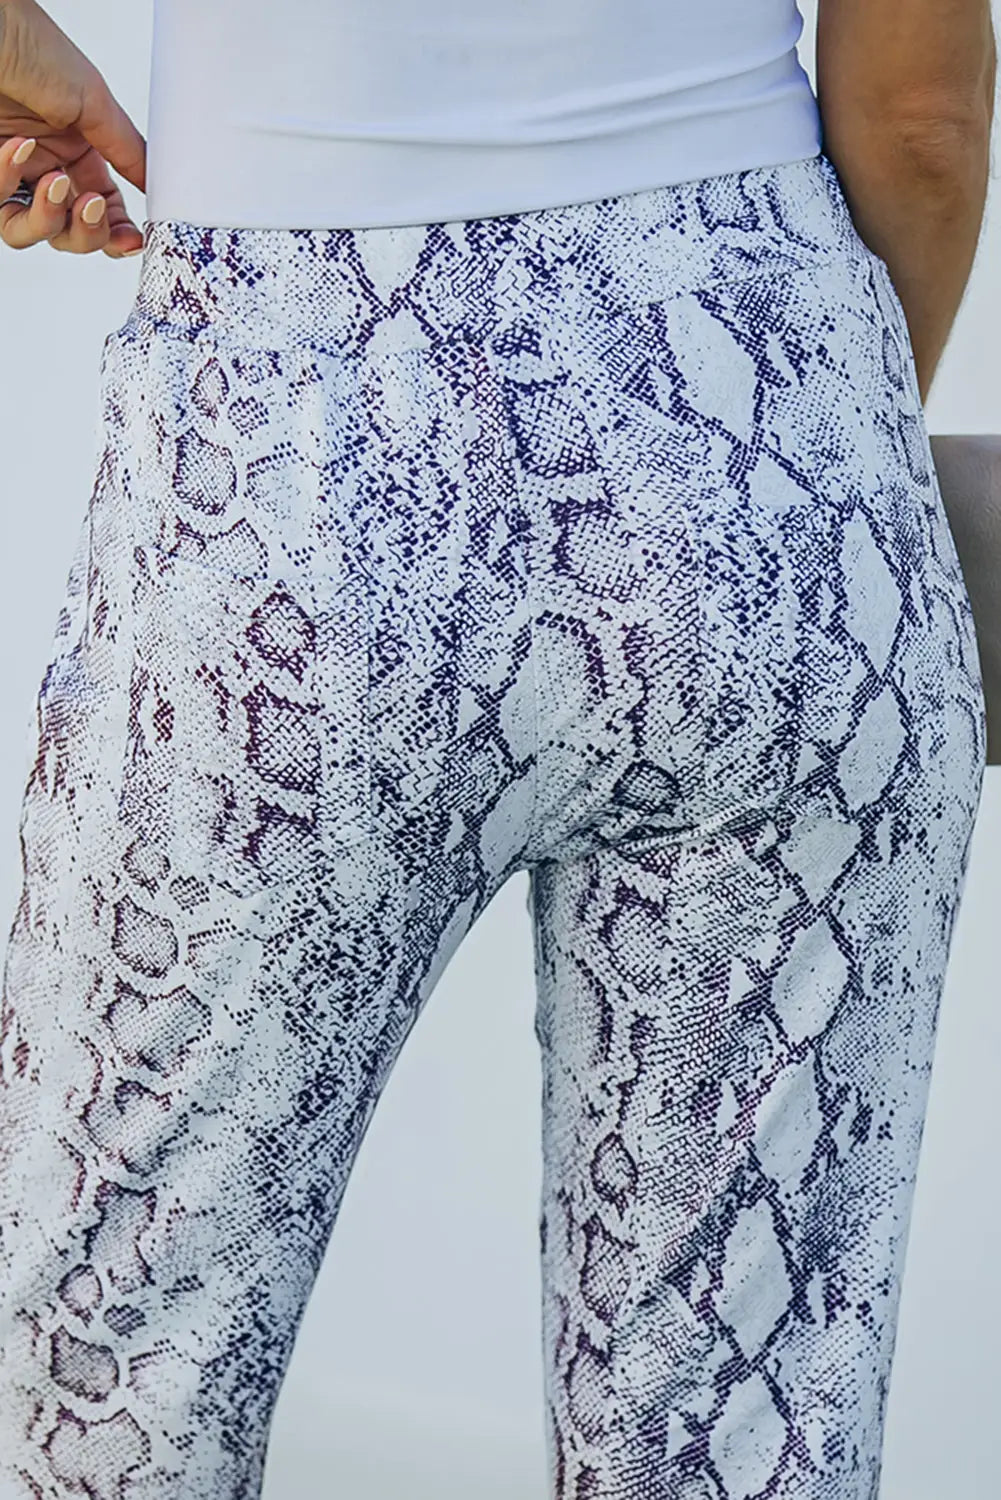 Snakeskin print wide legs pants - leg